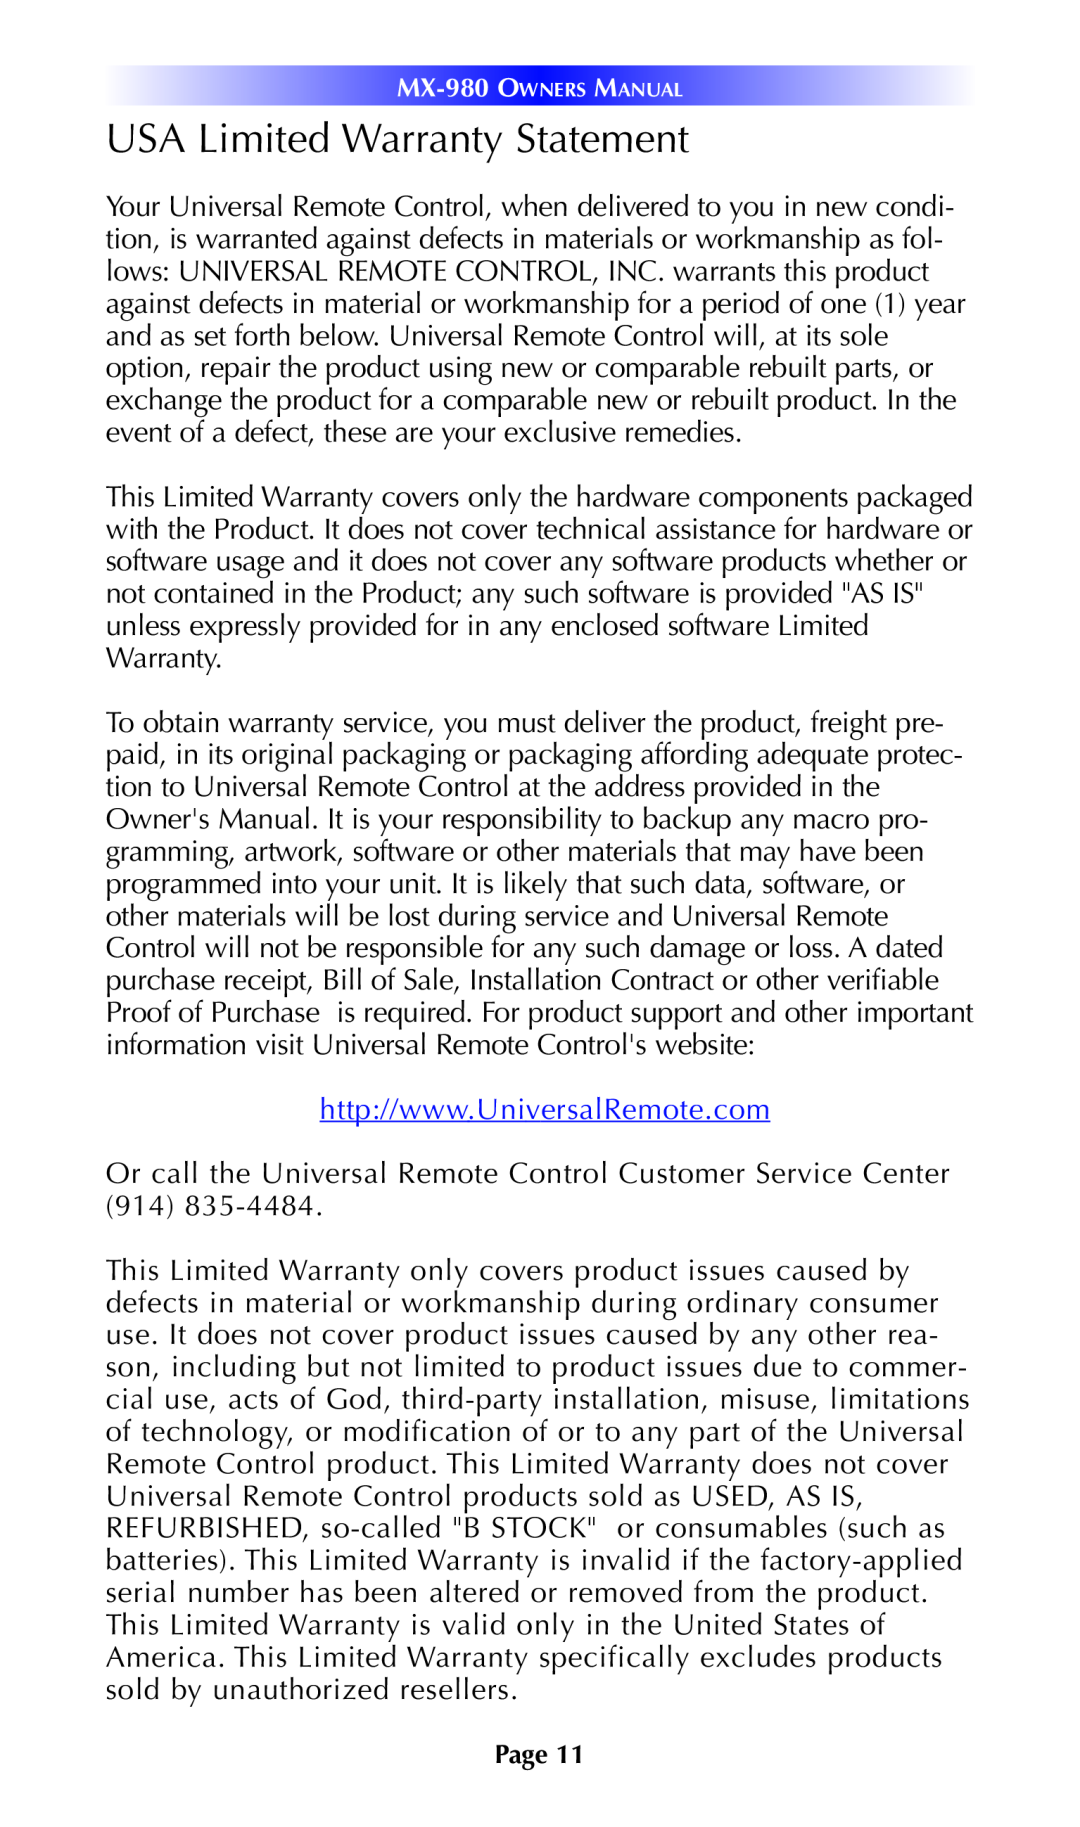 Universal Remote Control MX-980 manual USA Limited Warranty Statement 